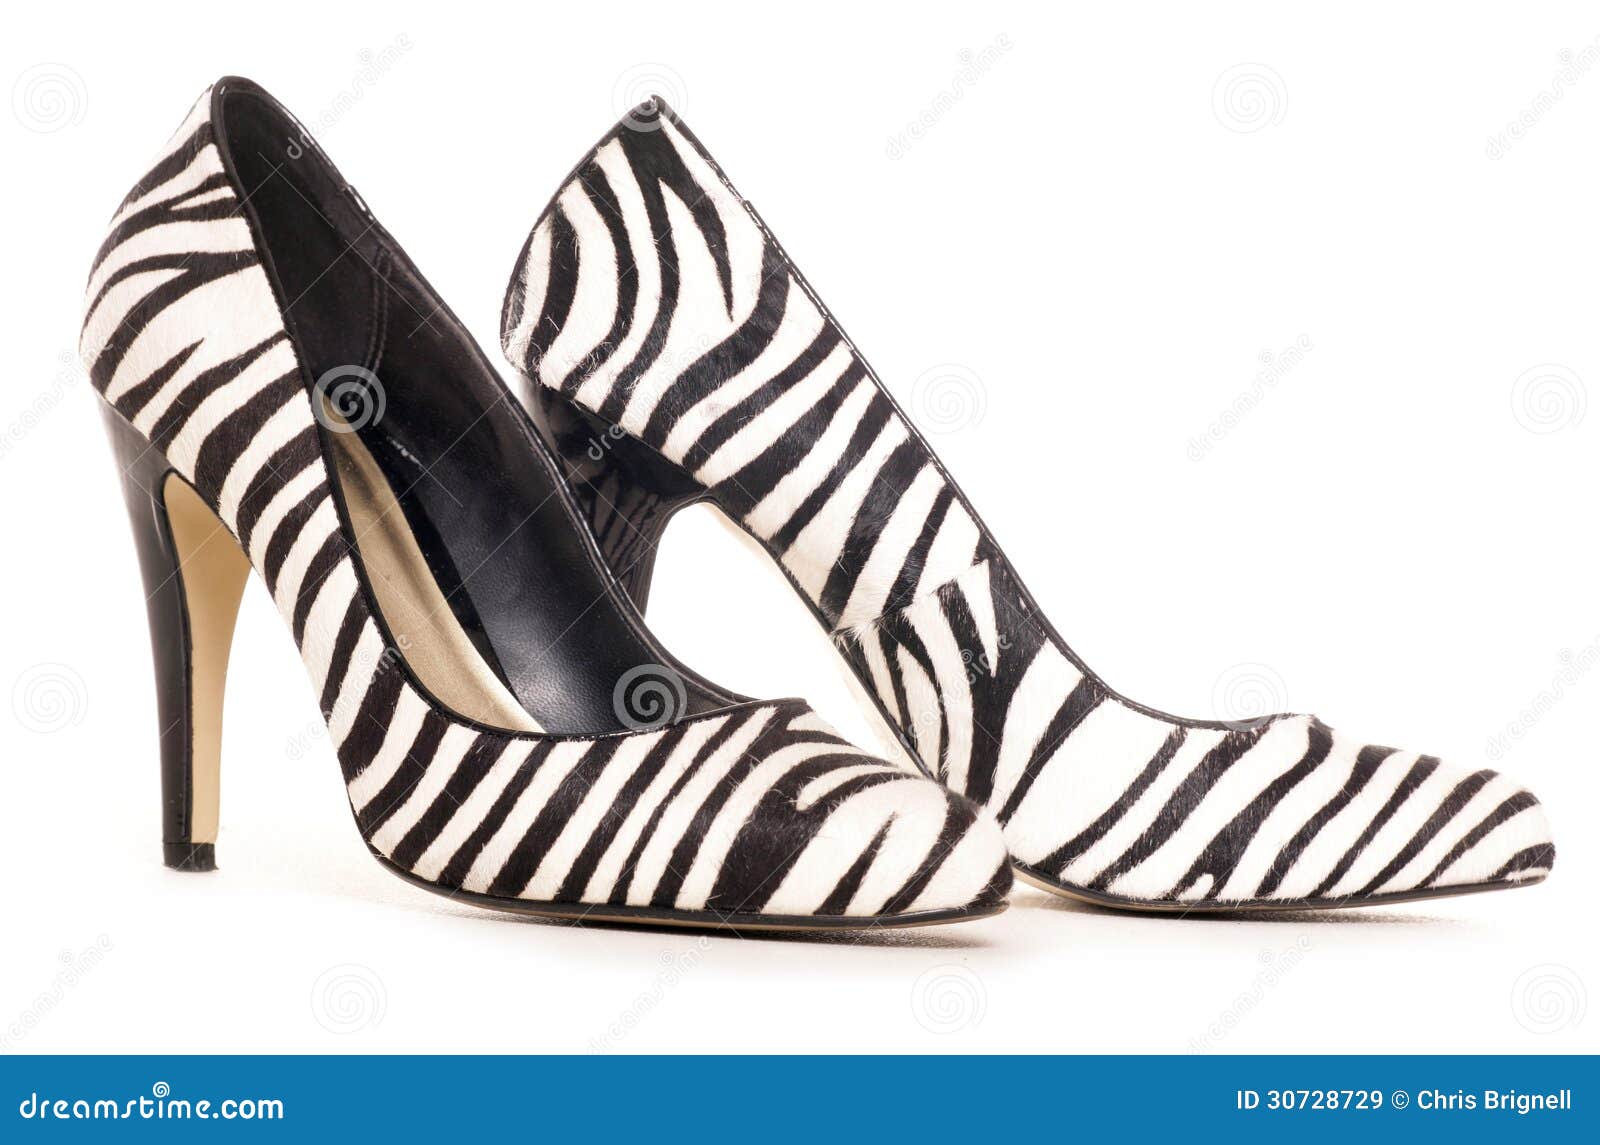 Vedolay High Heels Women High Heels for Women Arch Support Cut Out  Comfortable Anti-Slip Slides High Shoes,Black 9.5 - Walmart.com